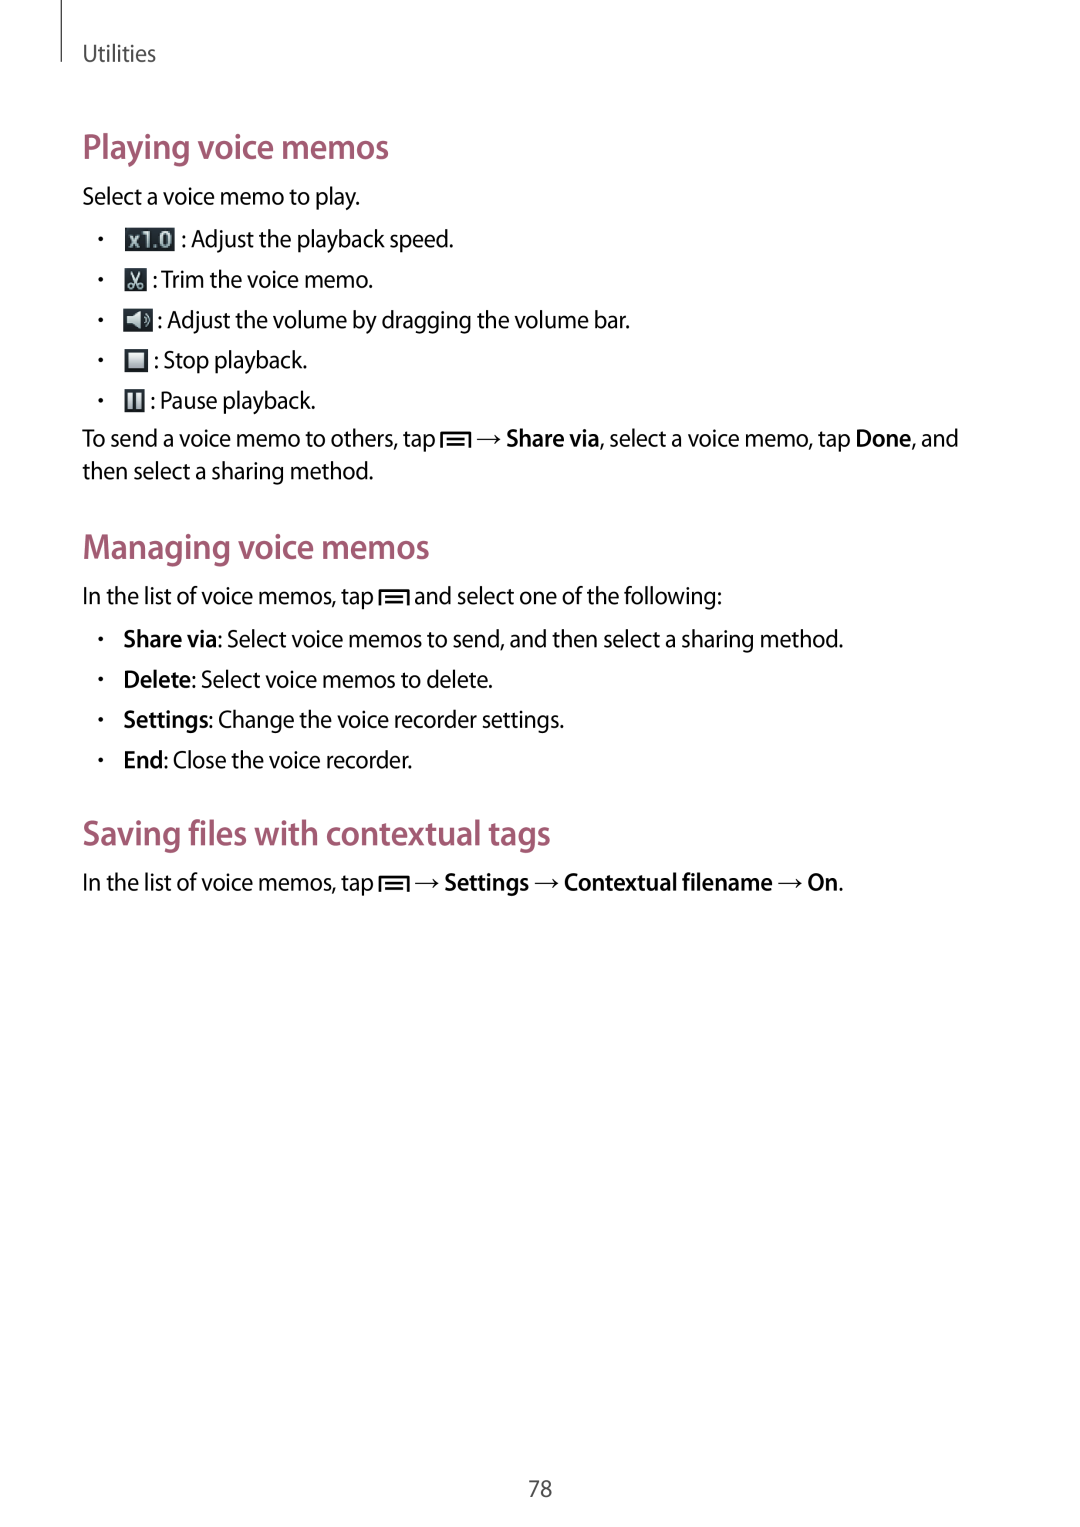 Samsung GT-S6790MKNXEF manual Playing voice memos, Managing voice memos, Saving files with contextual tags, Utilities 